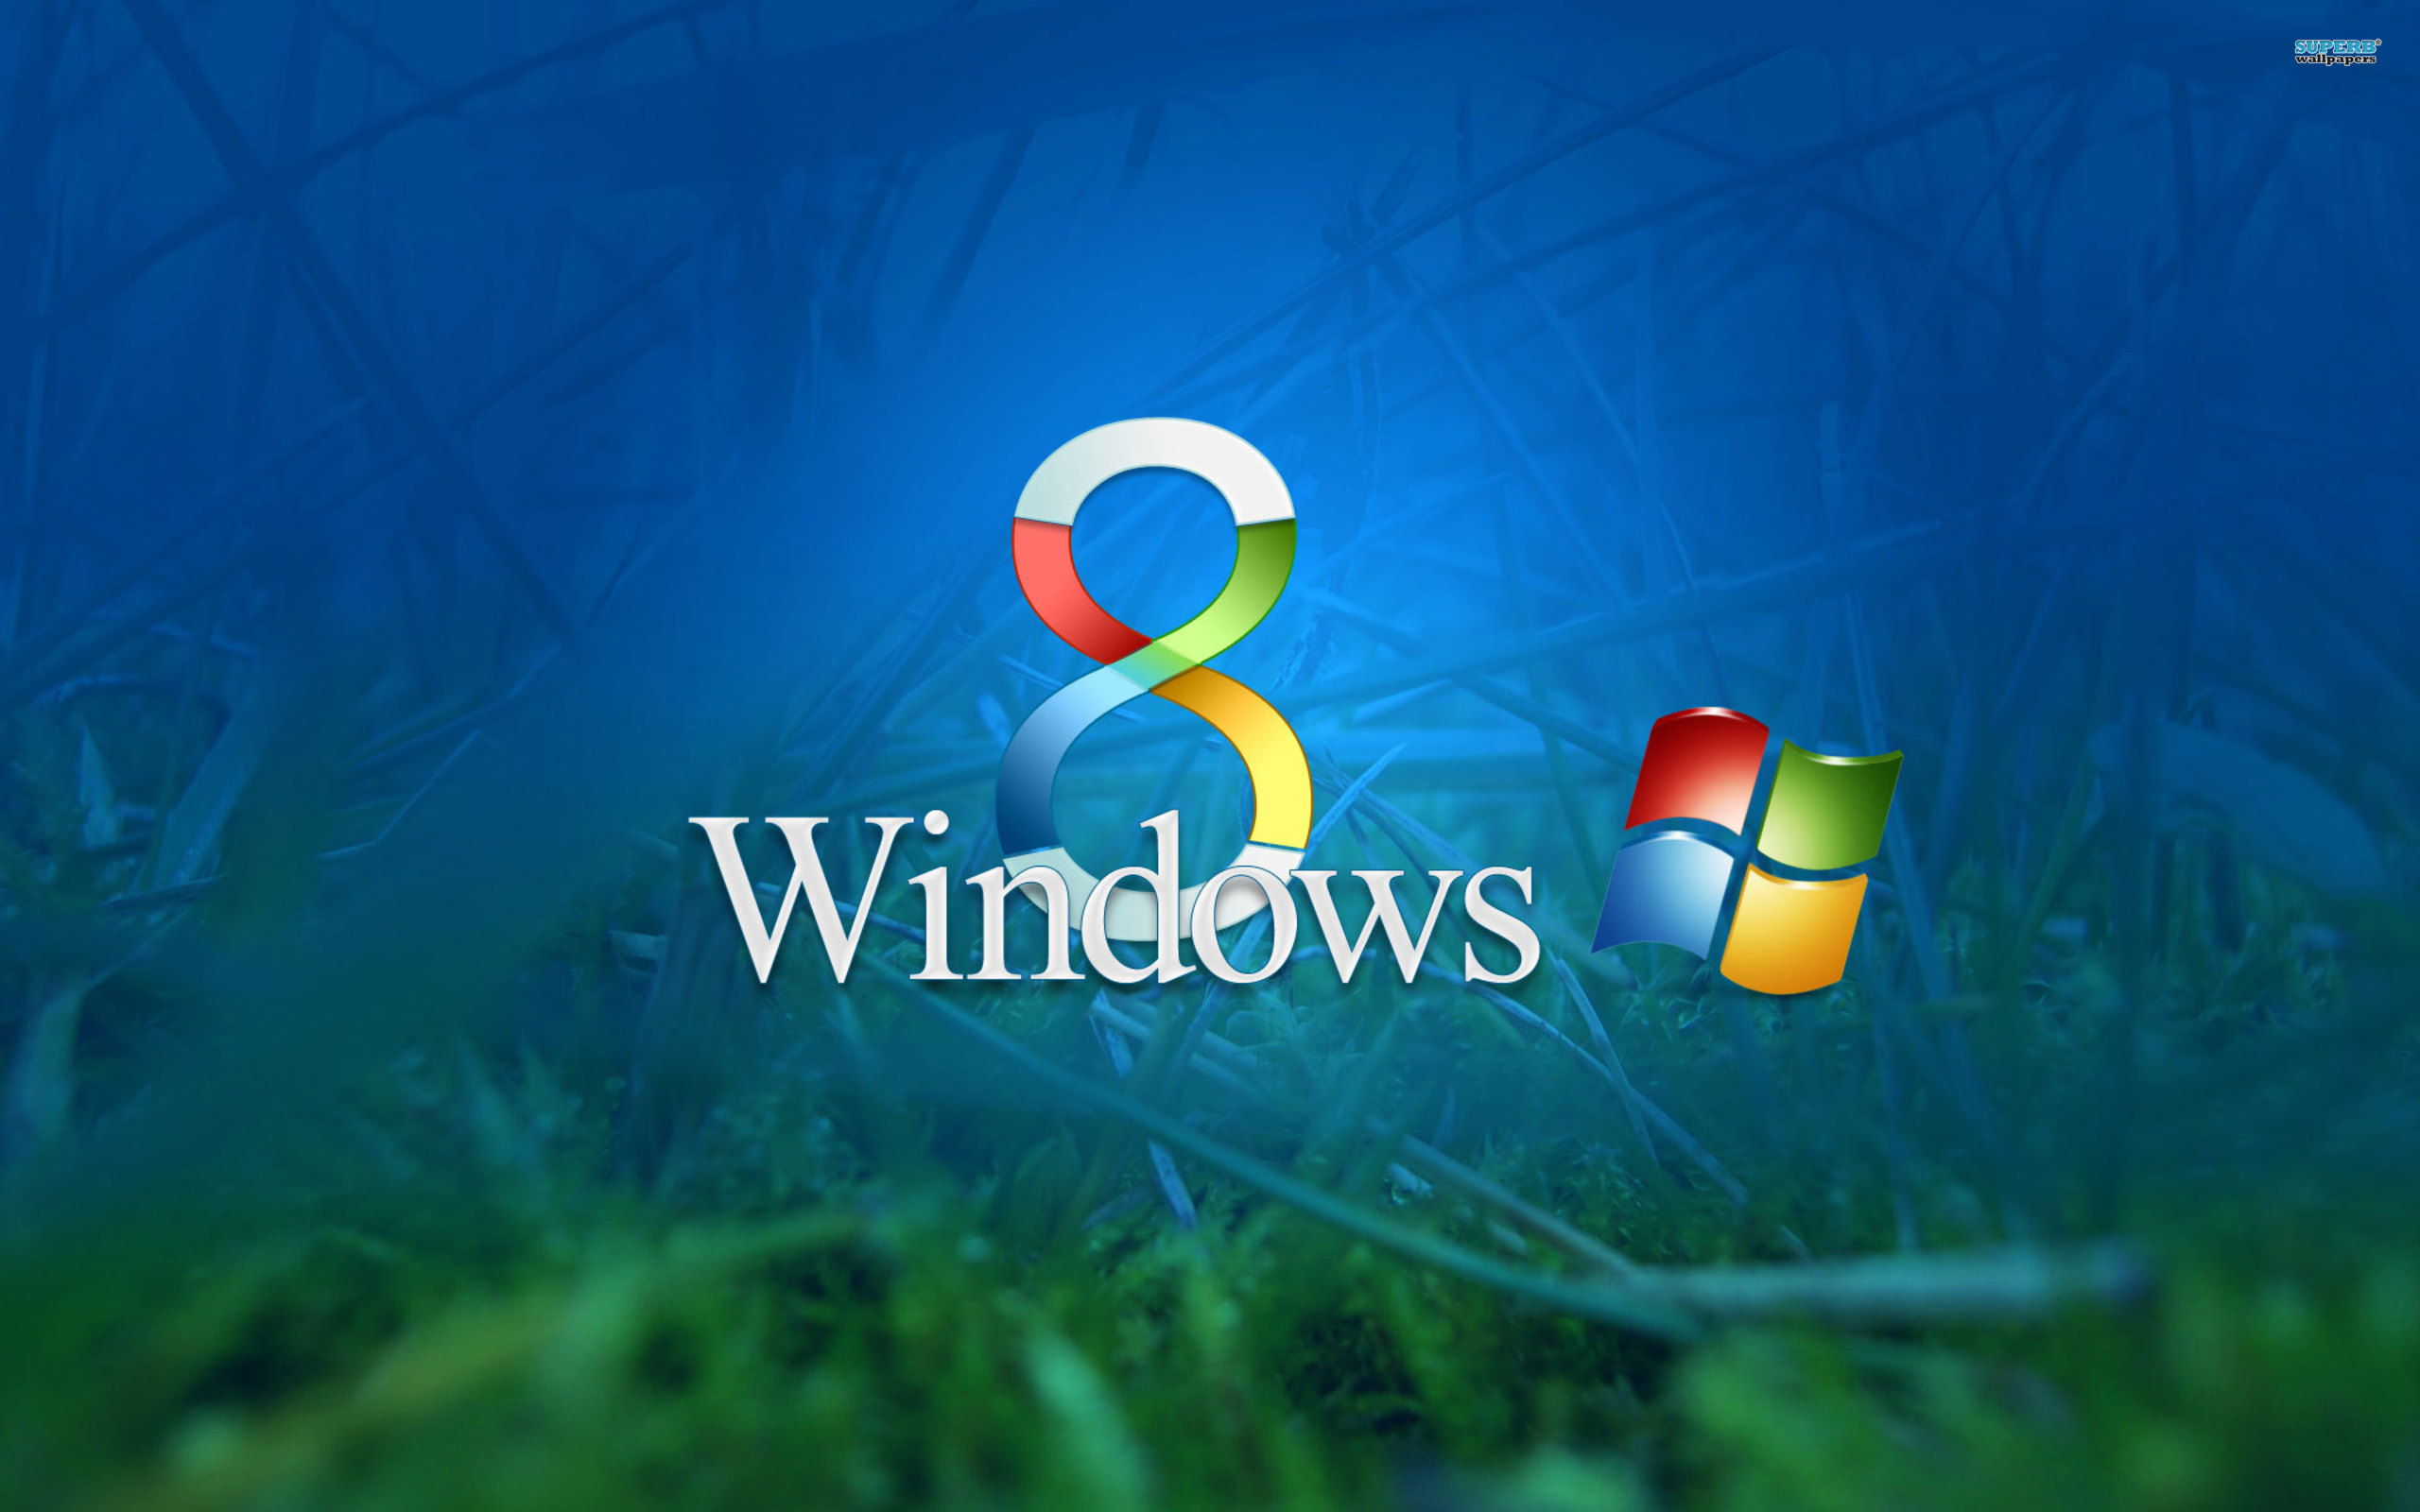 windows, windows 8, technology, microsoft 2160p